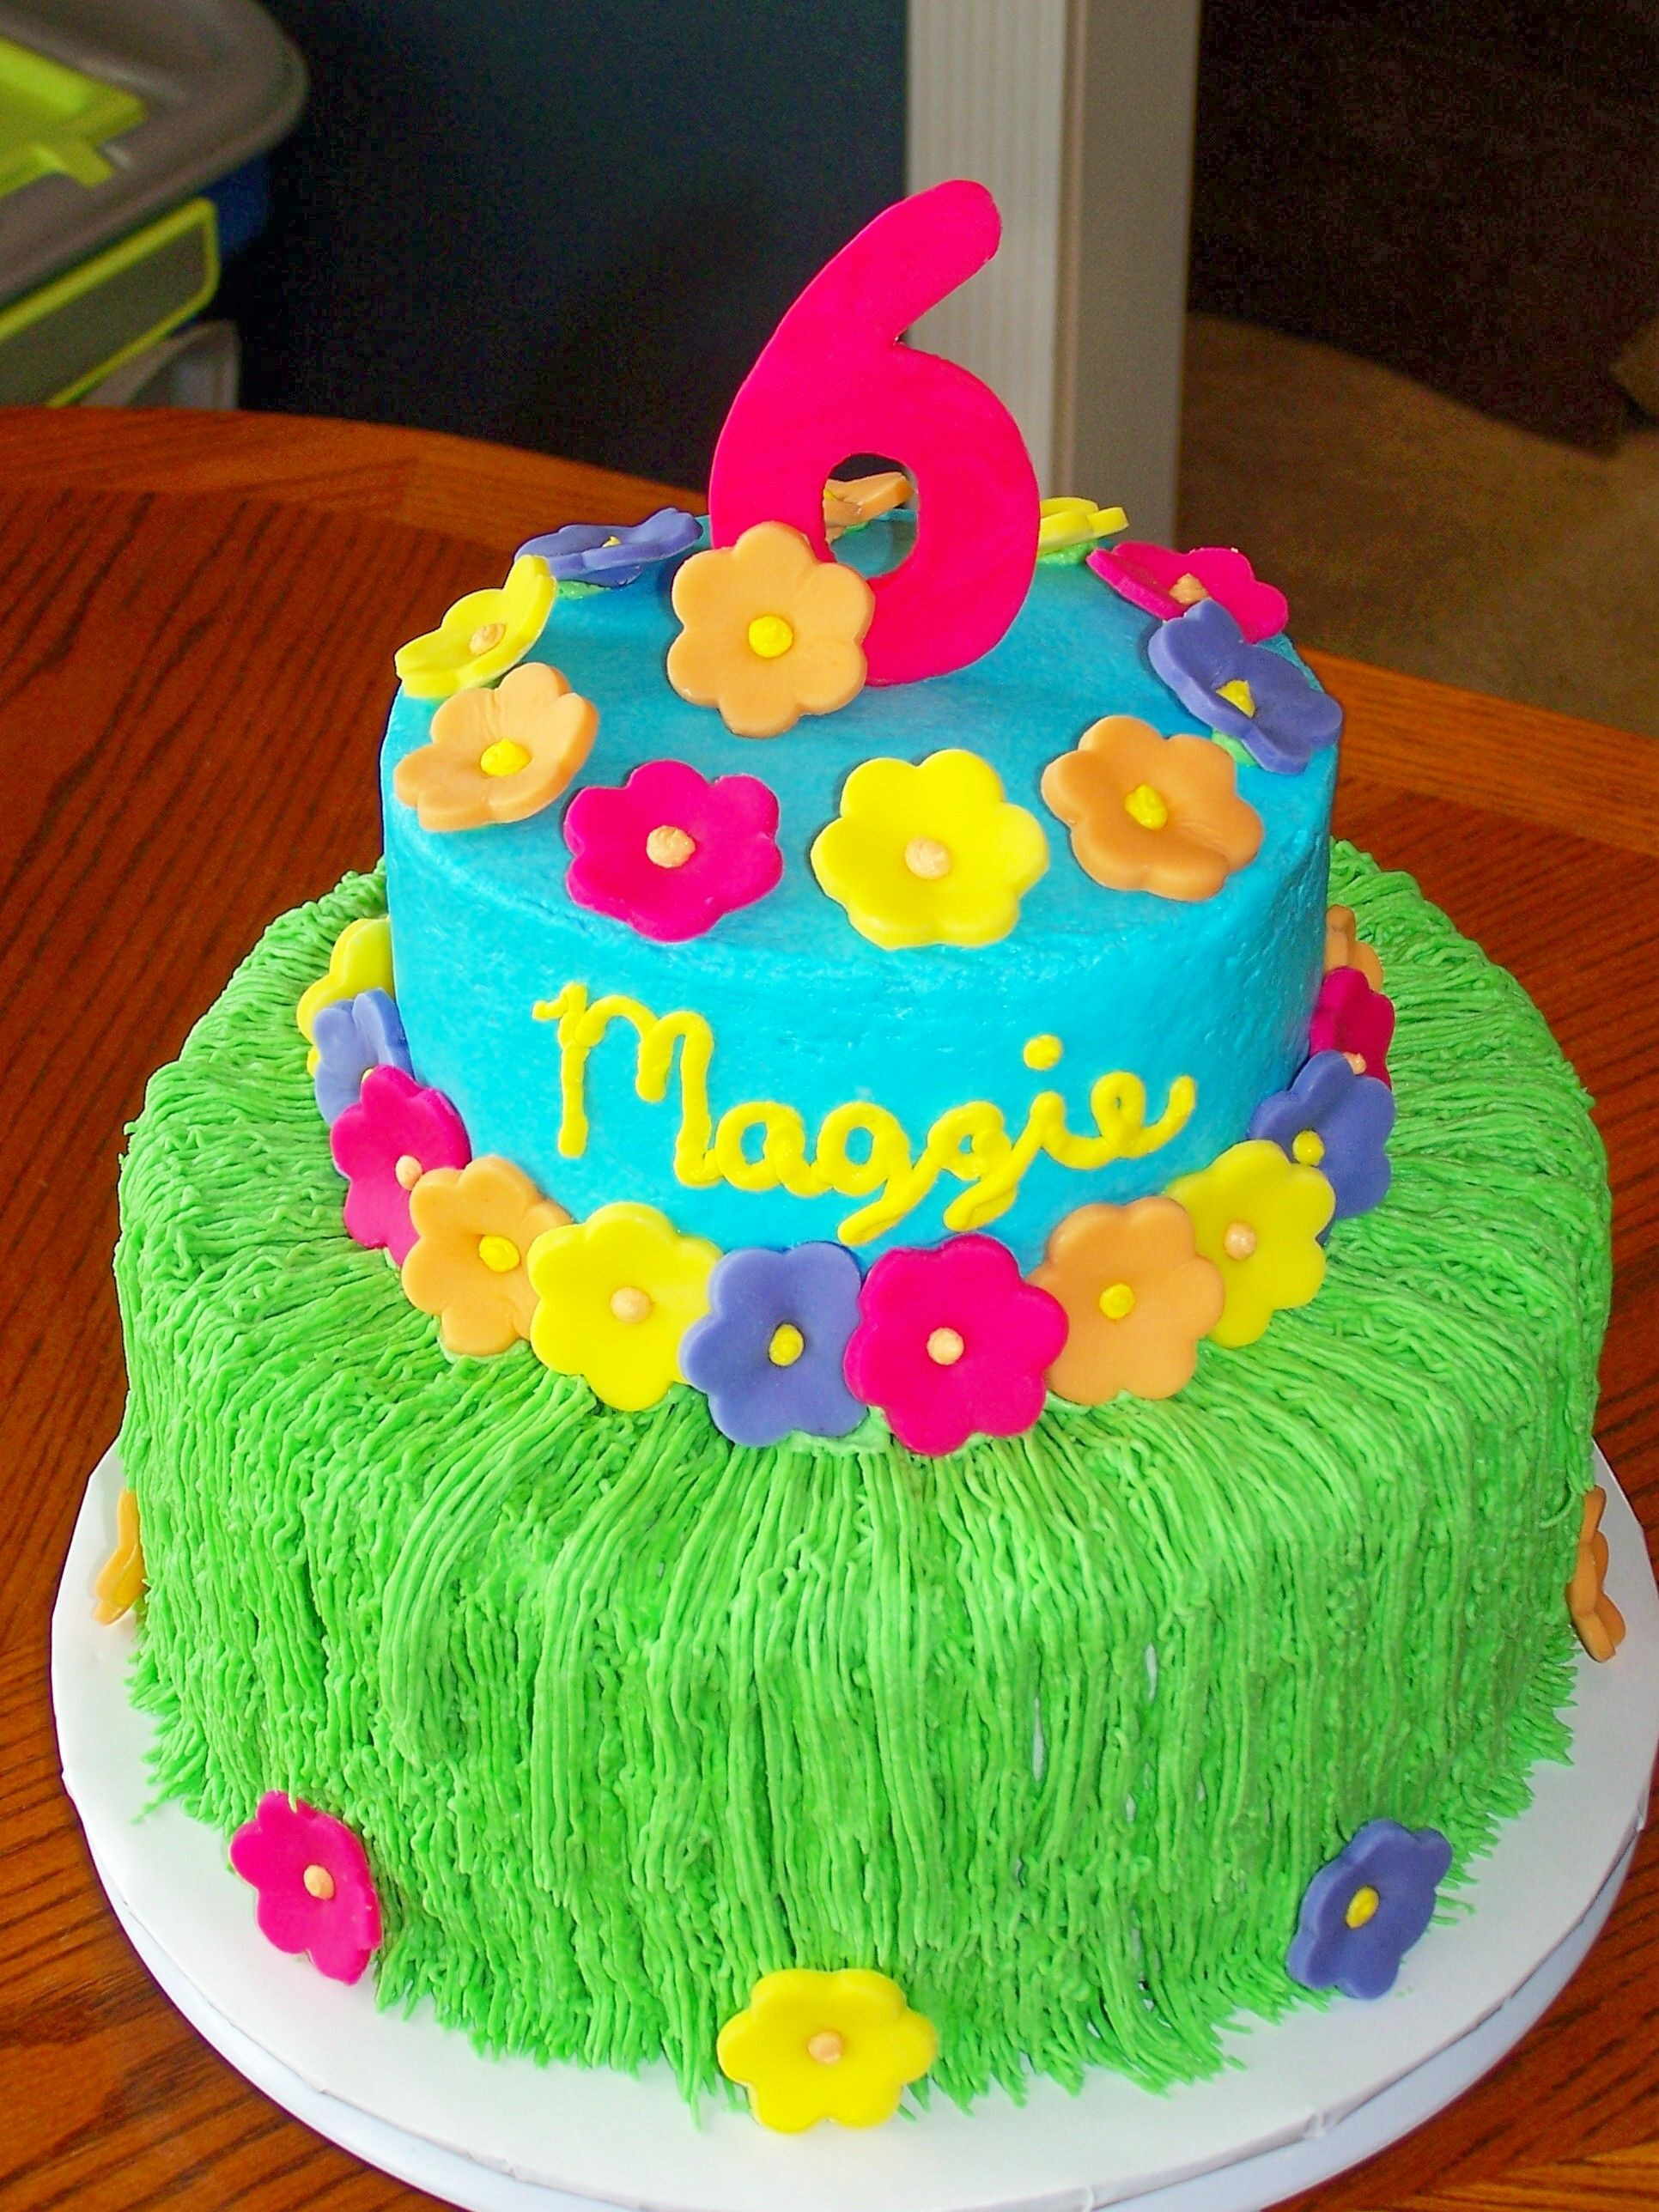 Best ideas about Hawaiian Birthday Cake
. Save or Pin luau birthday cakes Now.